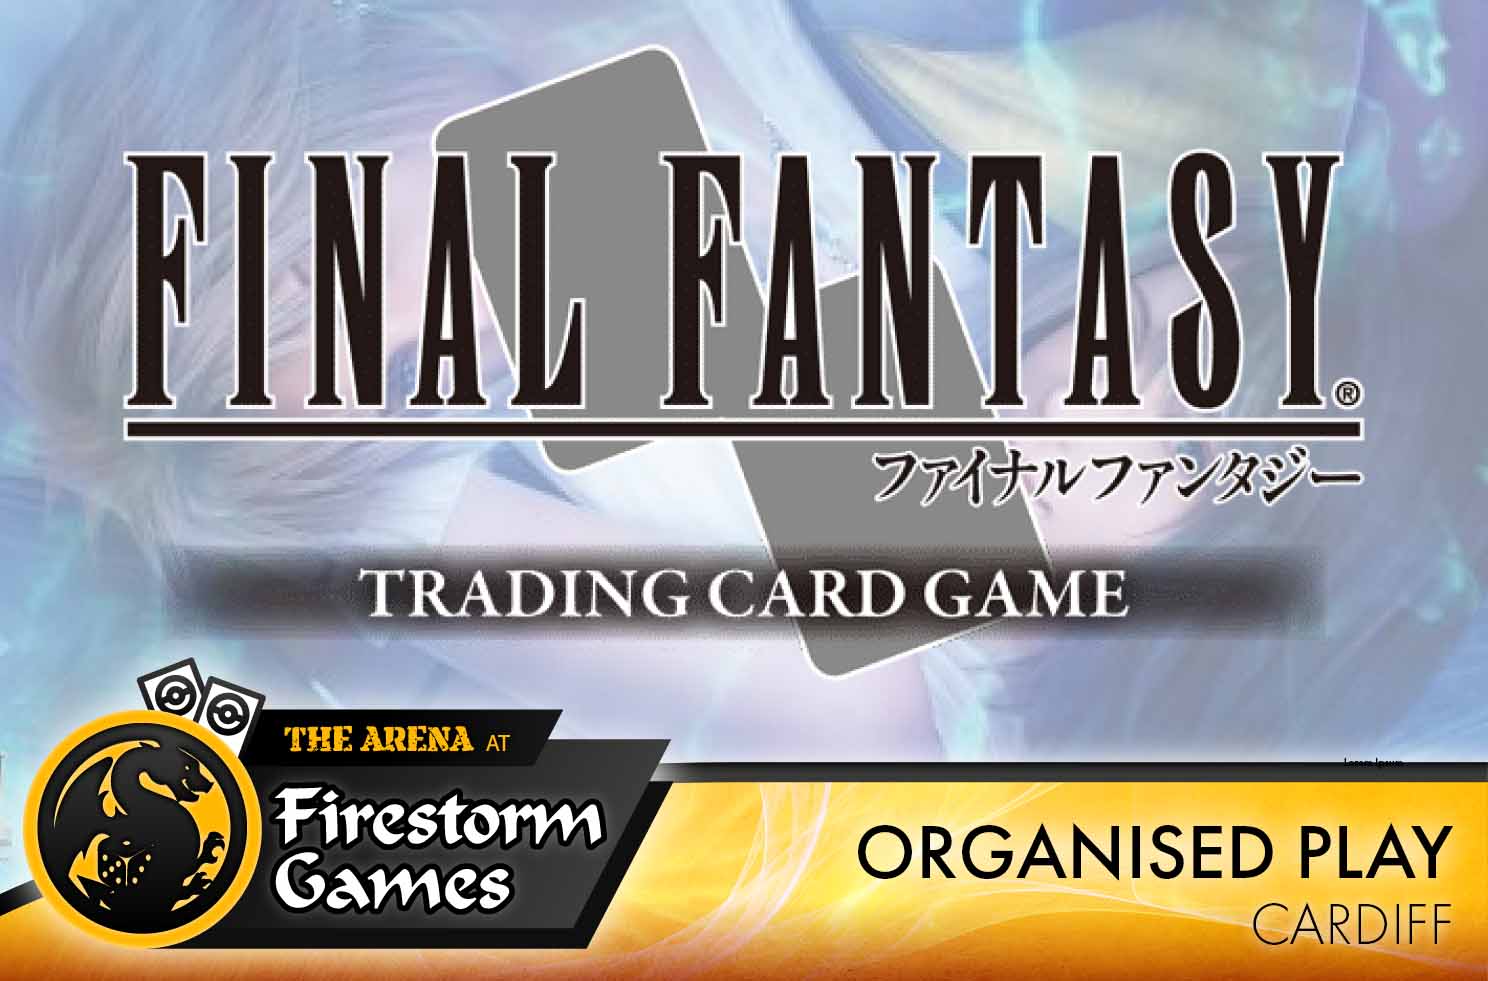 Final Fantasy TCG Thursday Organised Play